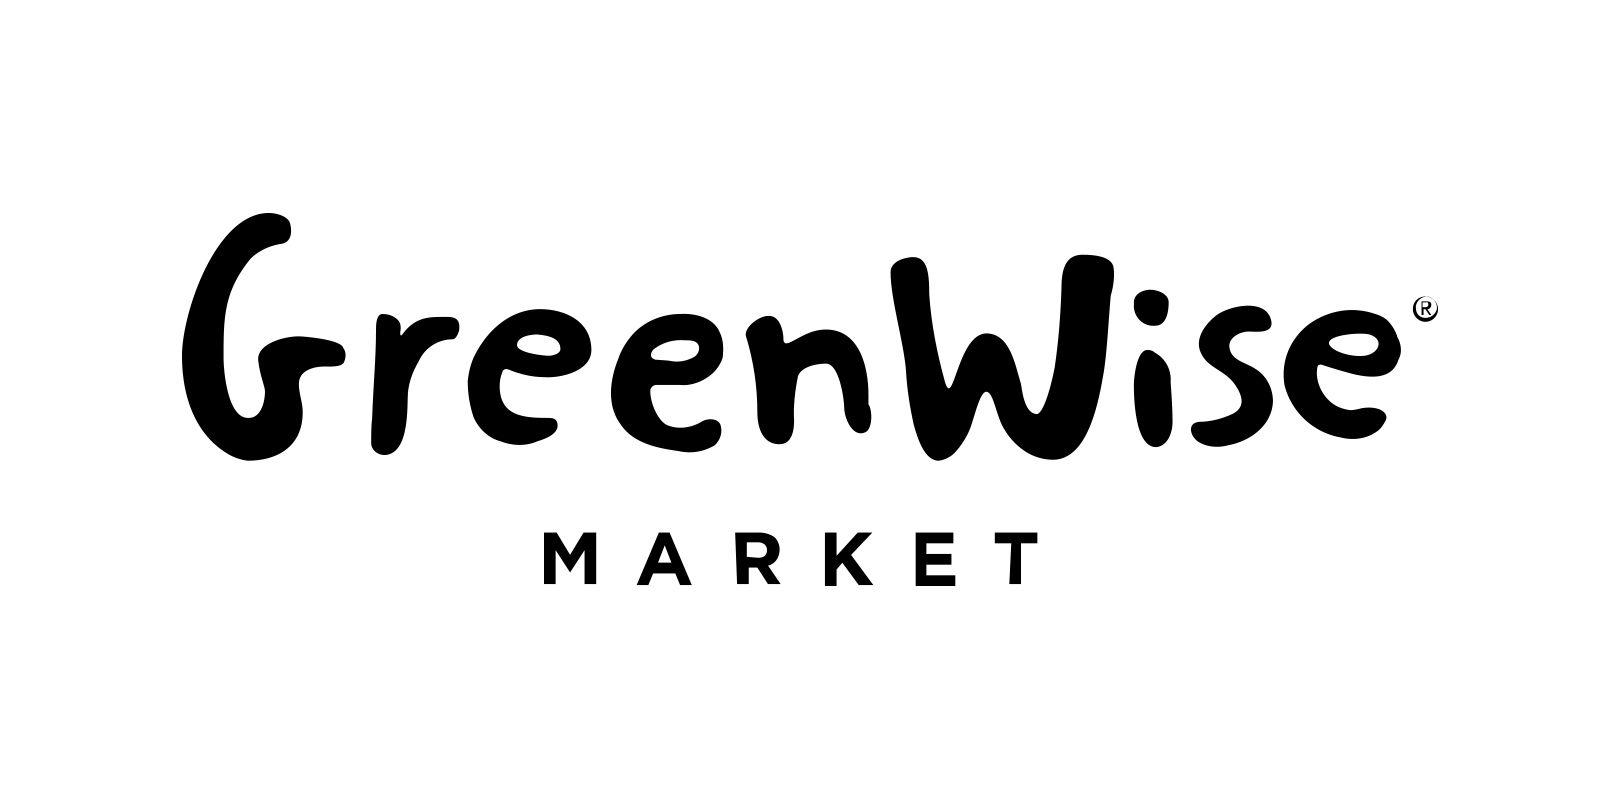 Black and White Market Logo - GreenWise Market